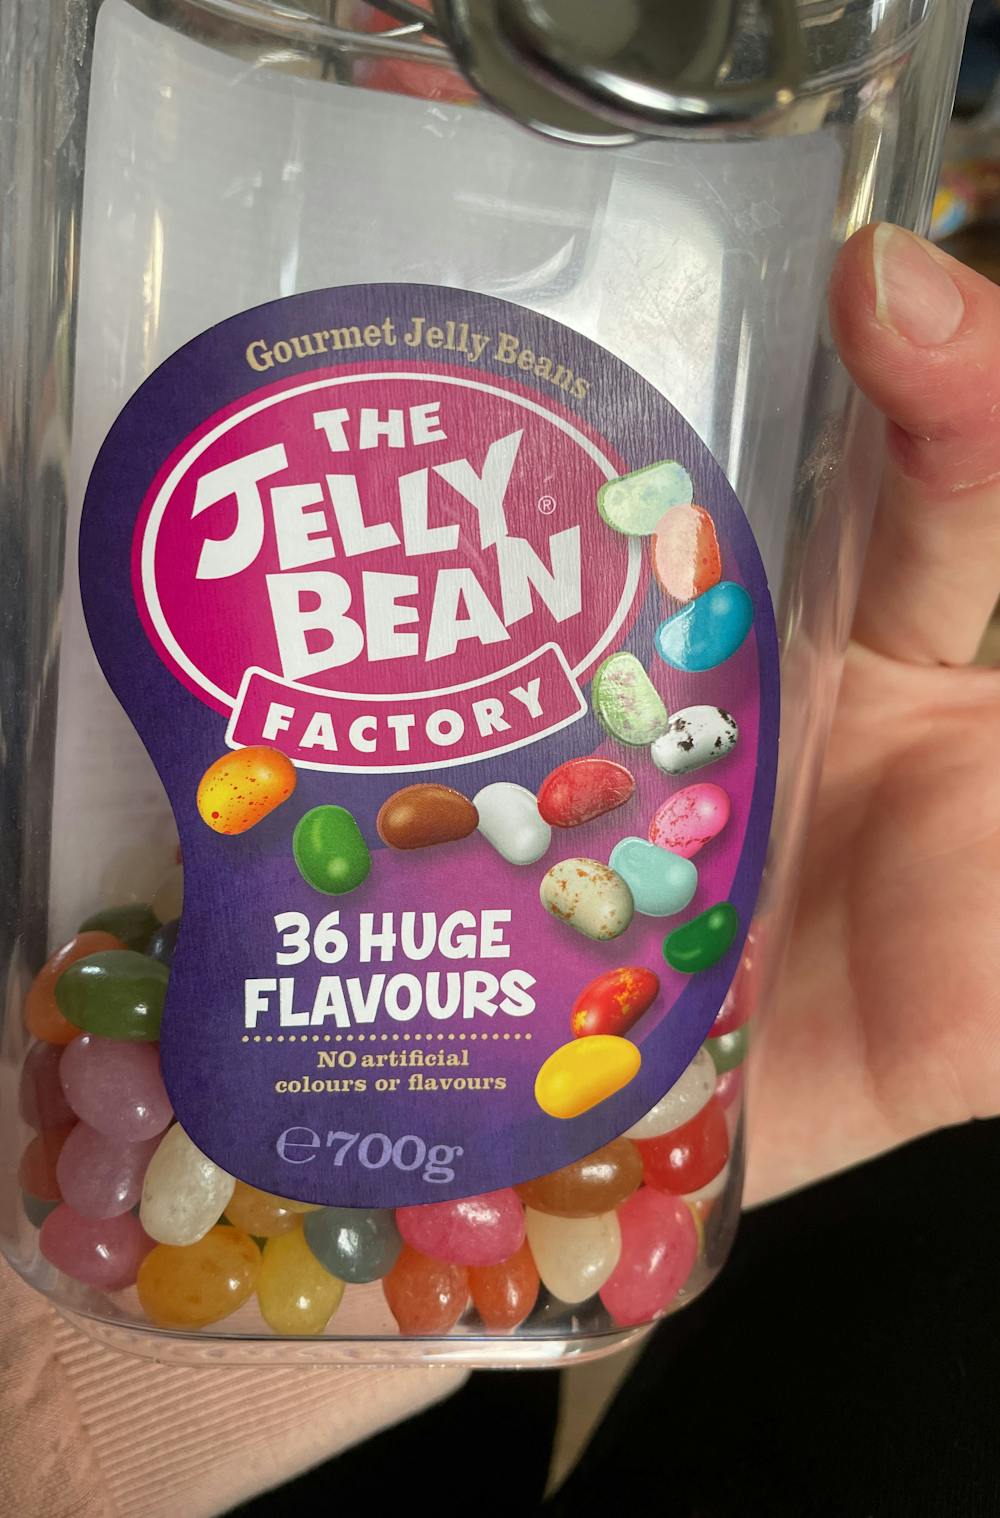 Jelly bean, Gourmet jelly beans